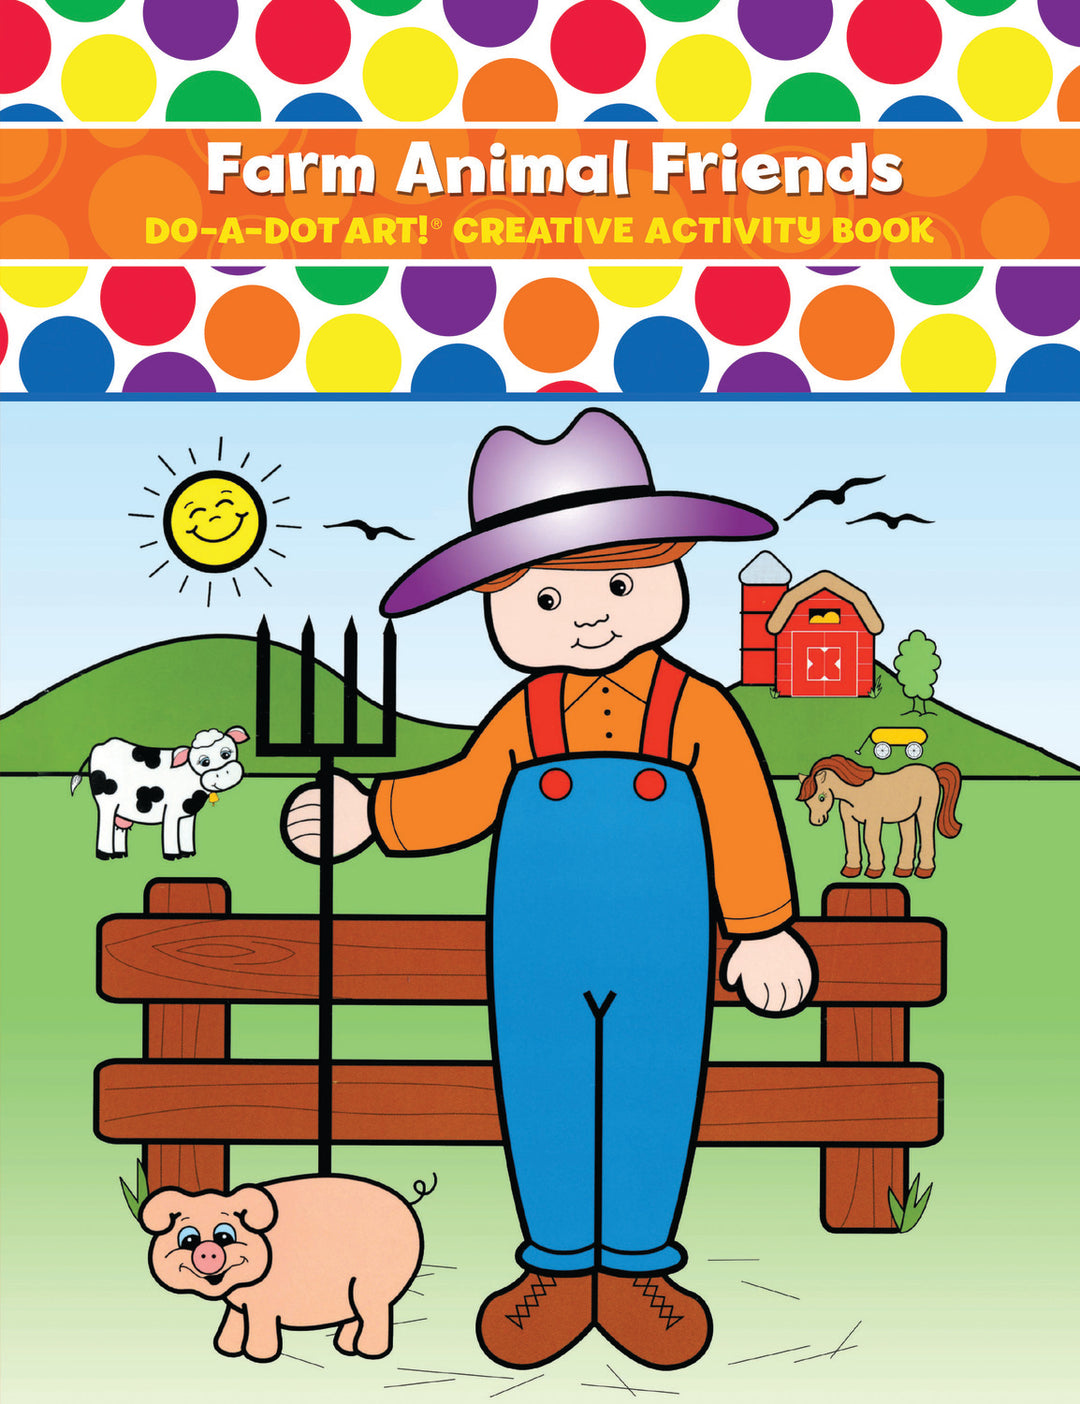 Do-A-Dot Farm Animal Friends Activity Book